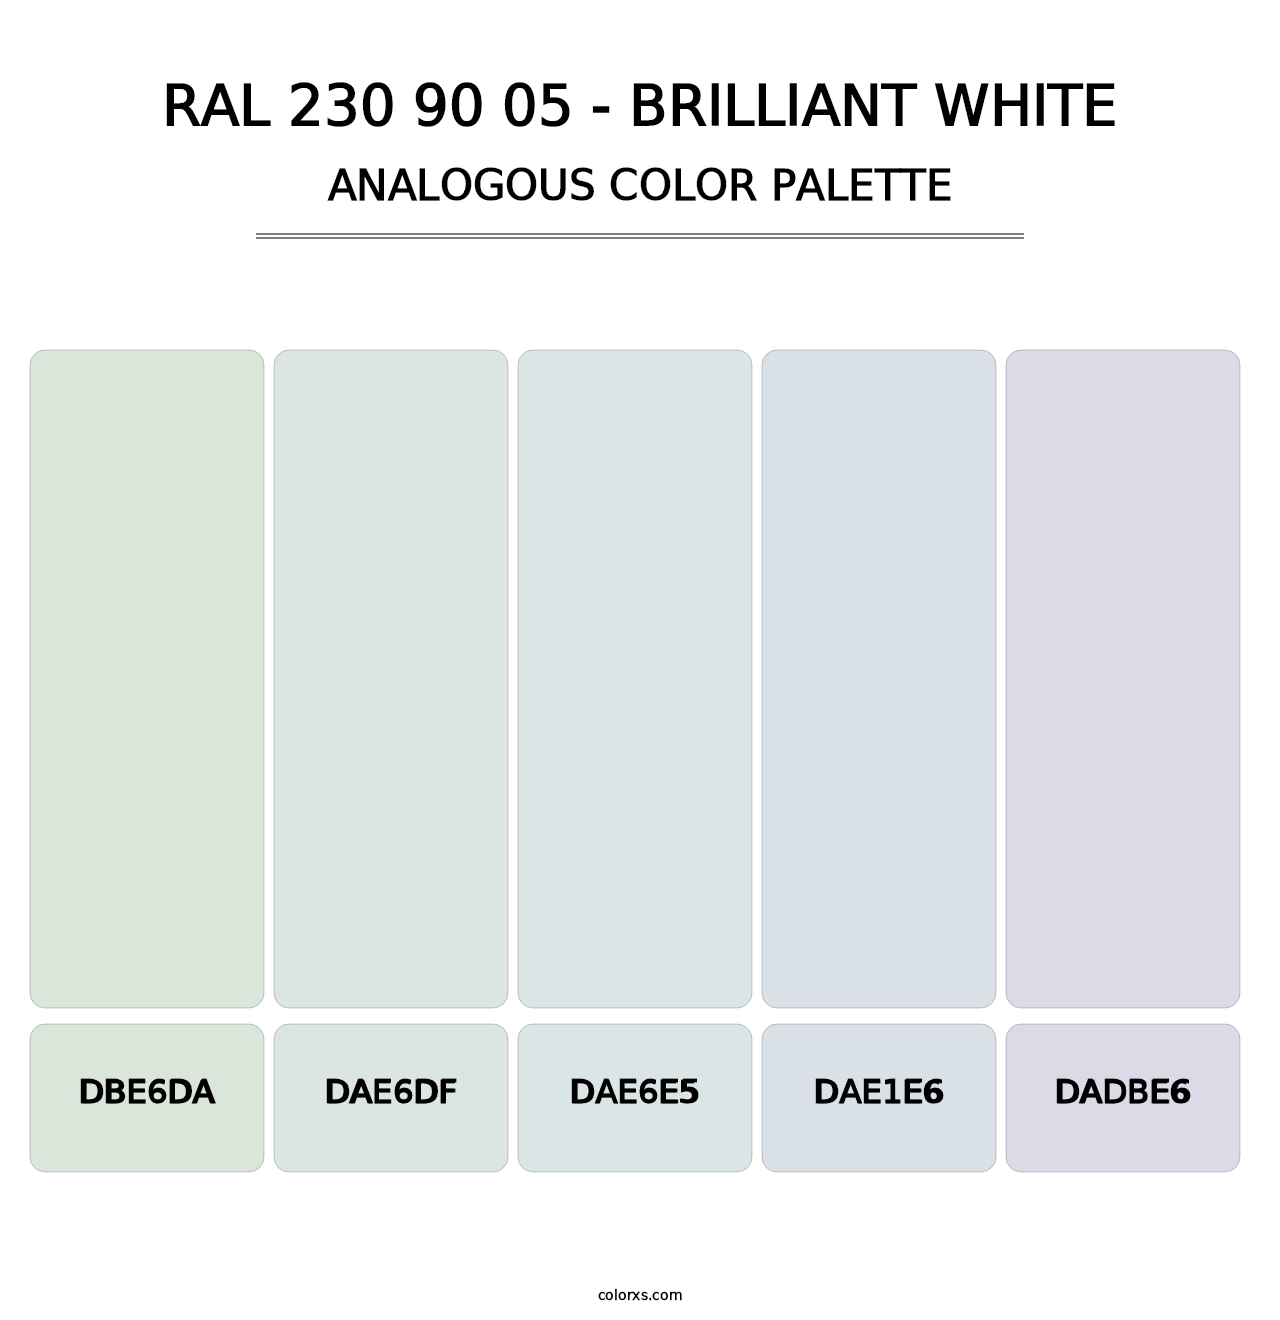 RAL 230 90 05 - Brilliant White - Analogous Color Palette